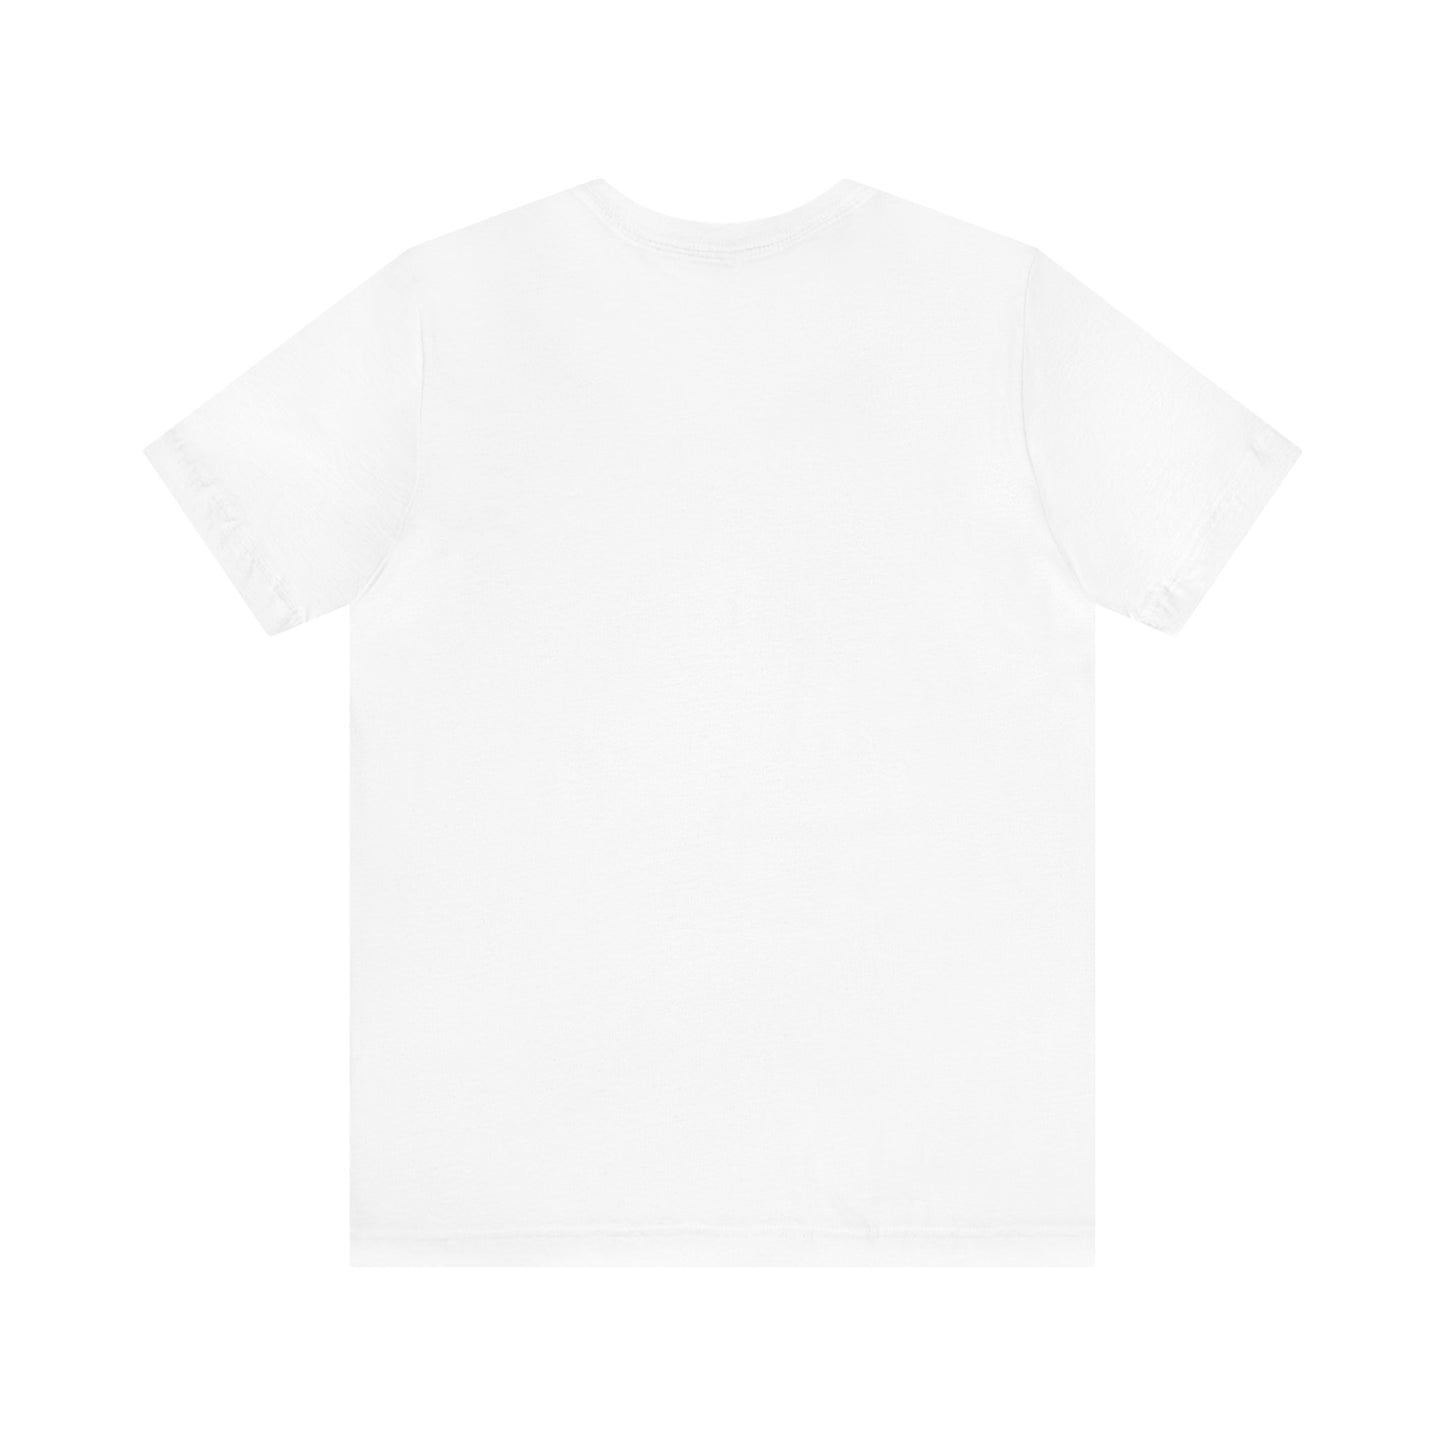 Eonix ASD T-Shirt